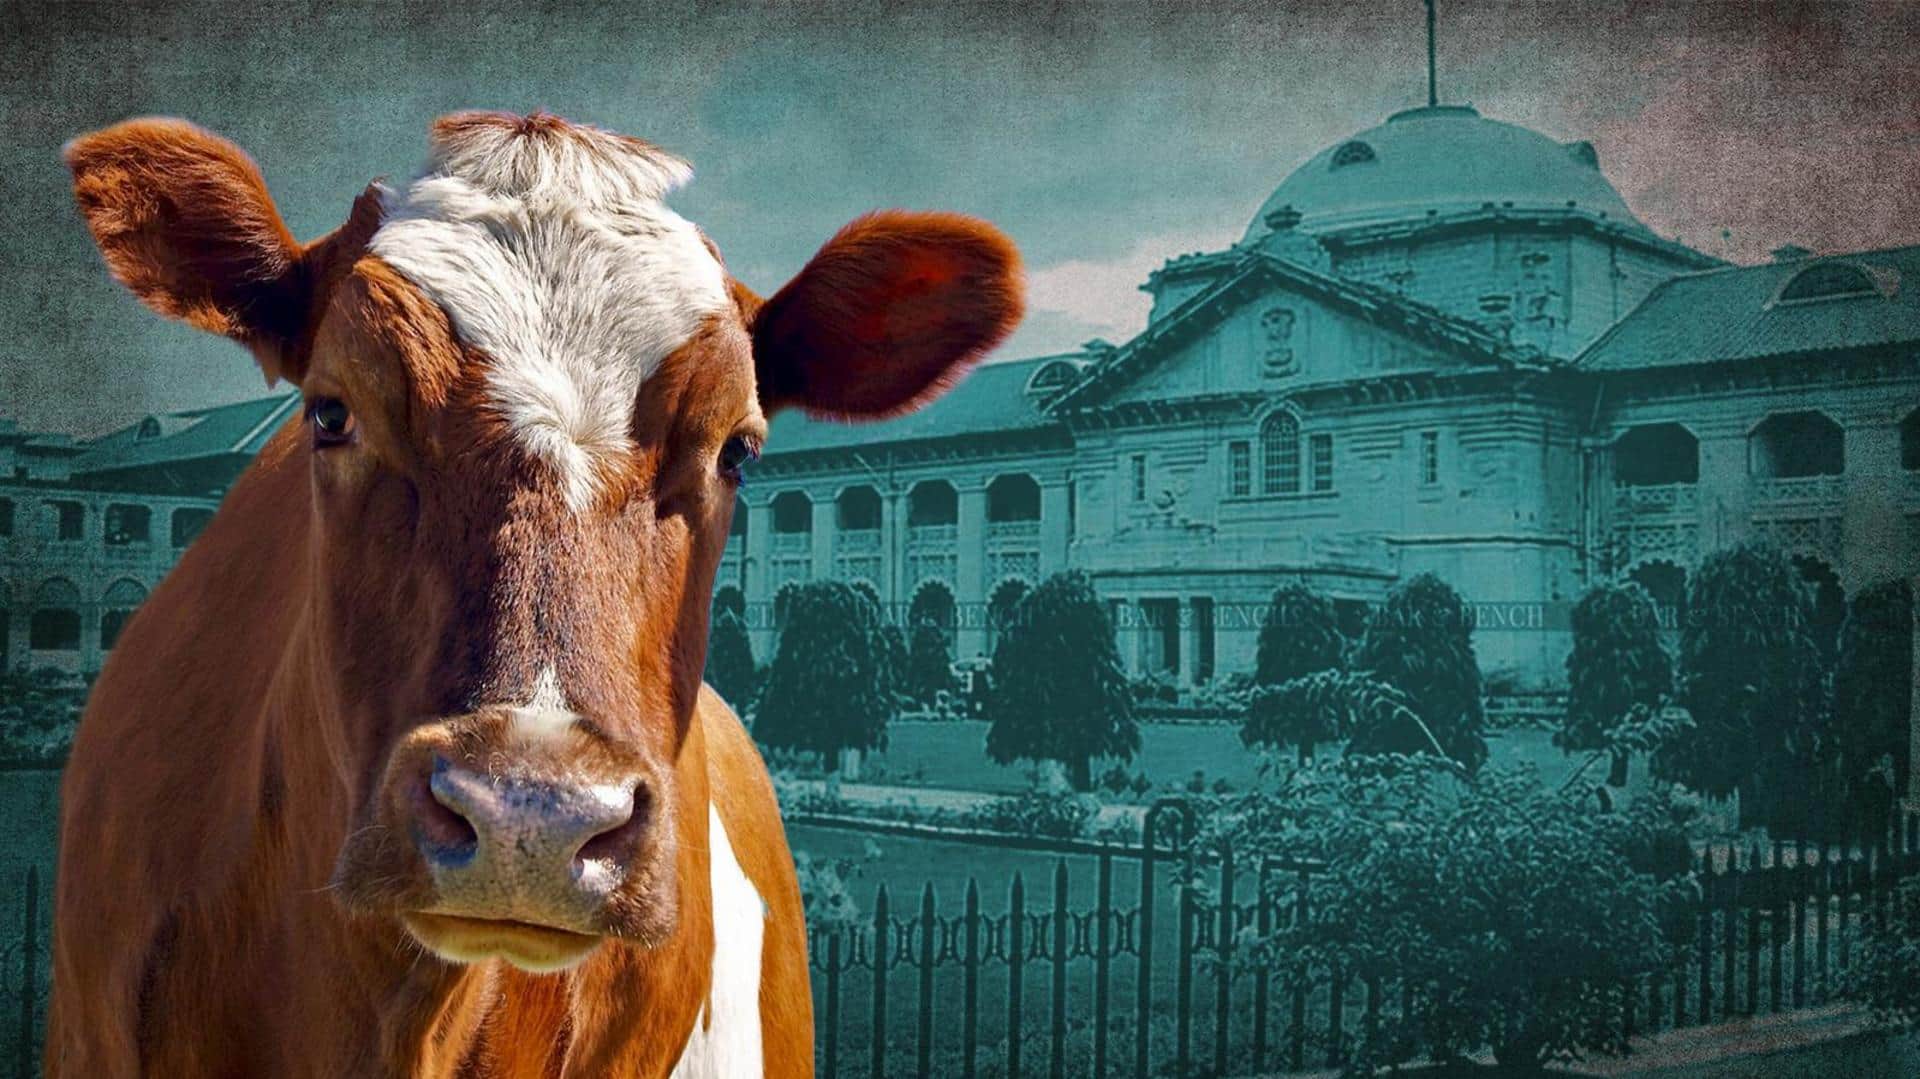 Invoking Hindu scriptures, Allahabad HC judge seeks cow slaughter ban